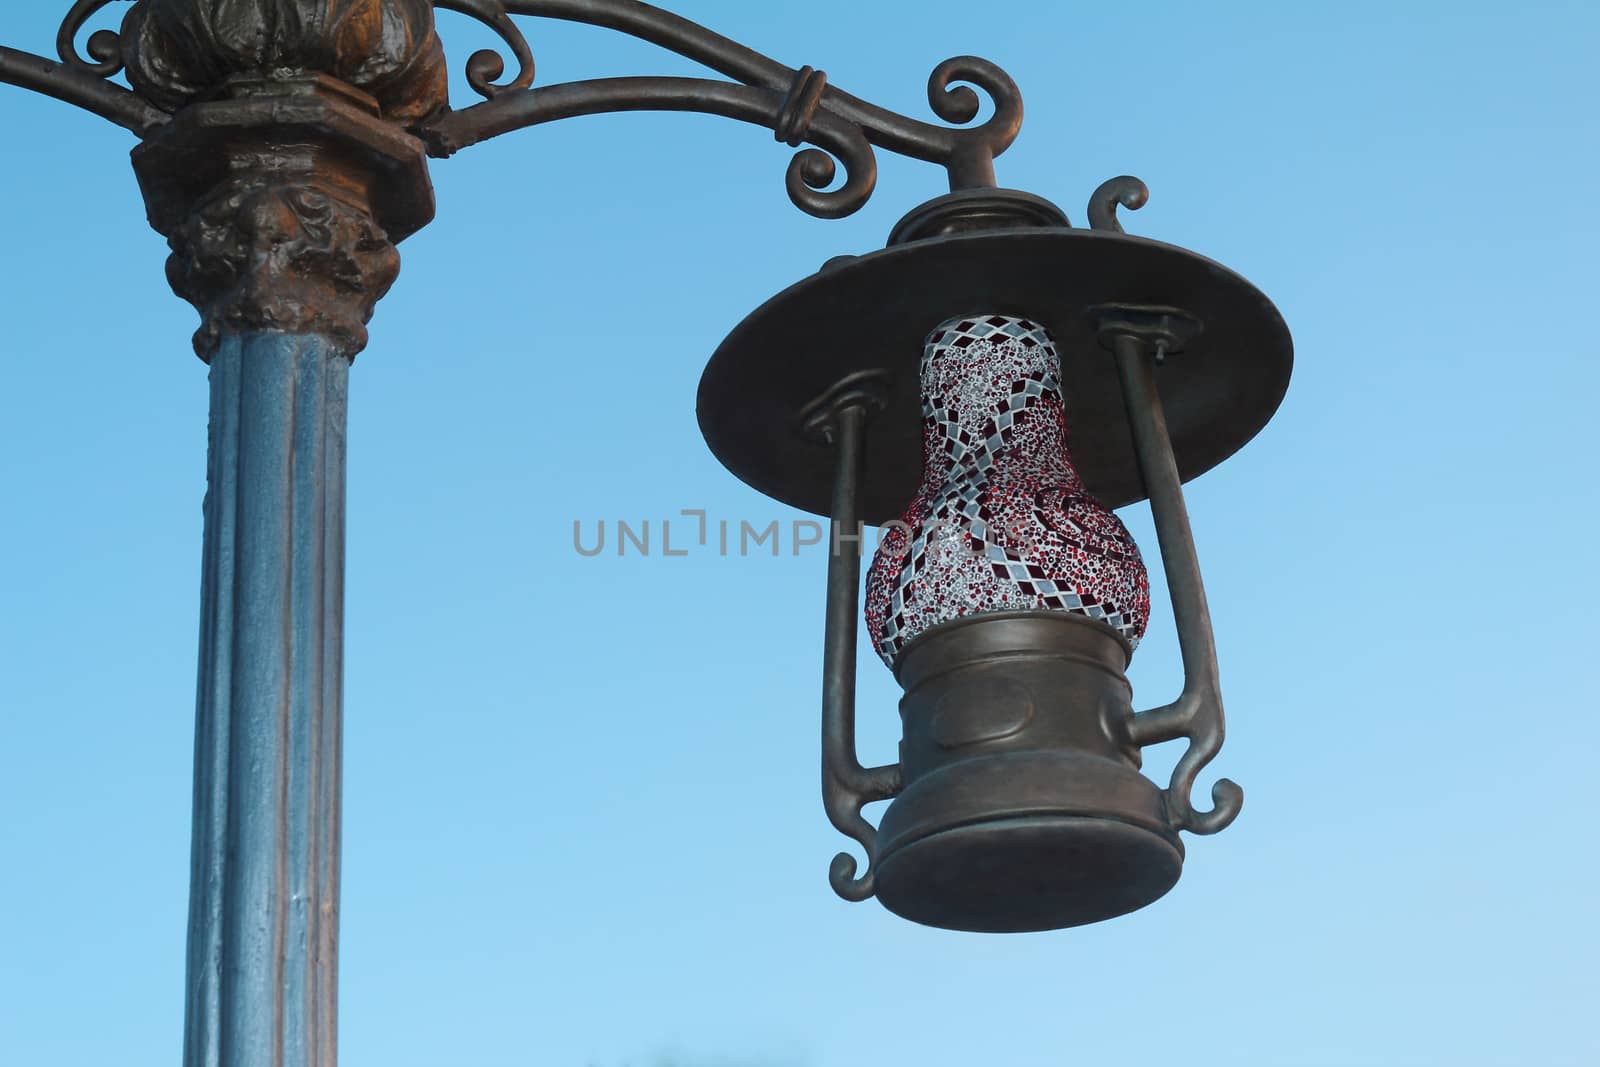 Lantern on the street its original form as an antique lamp. by georgina198